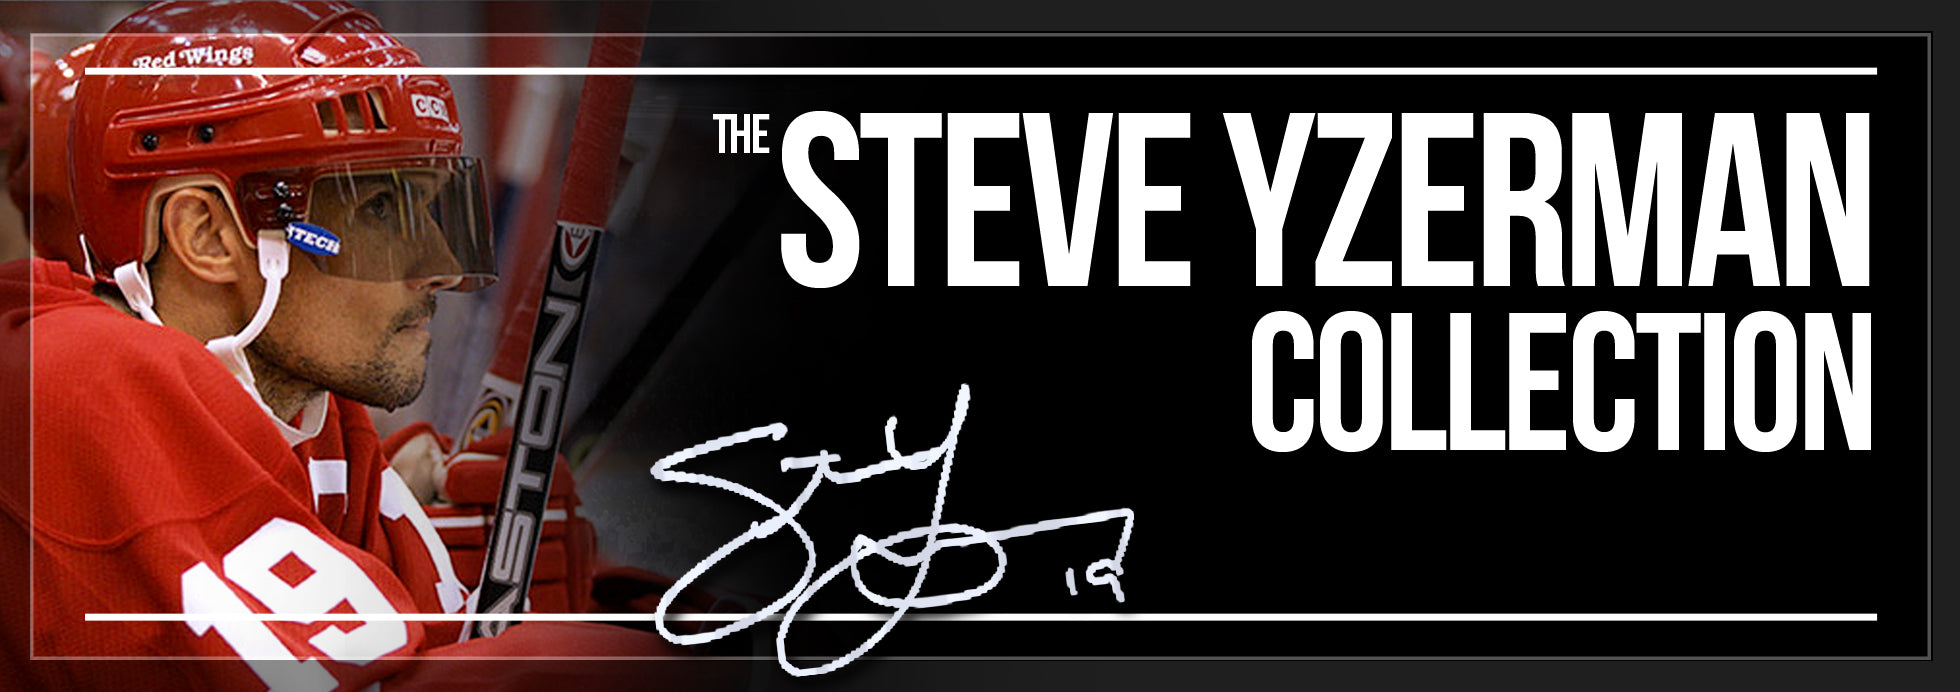 Steve Yzerman Collection Banner